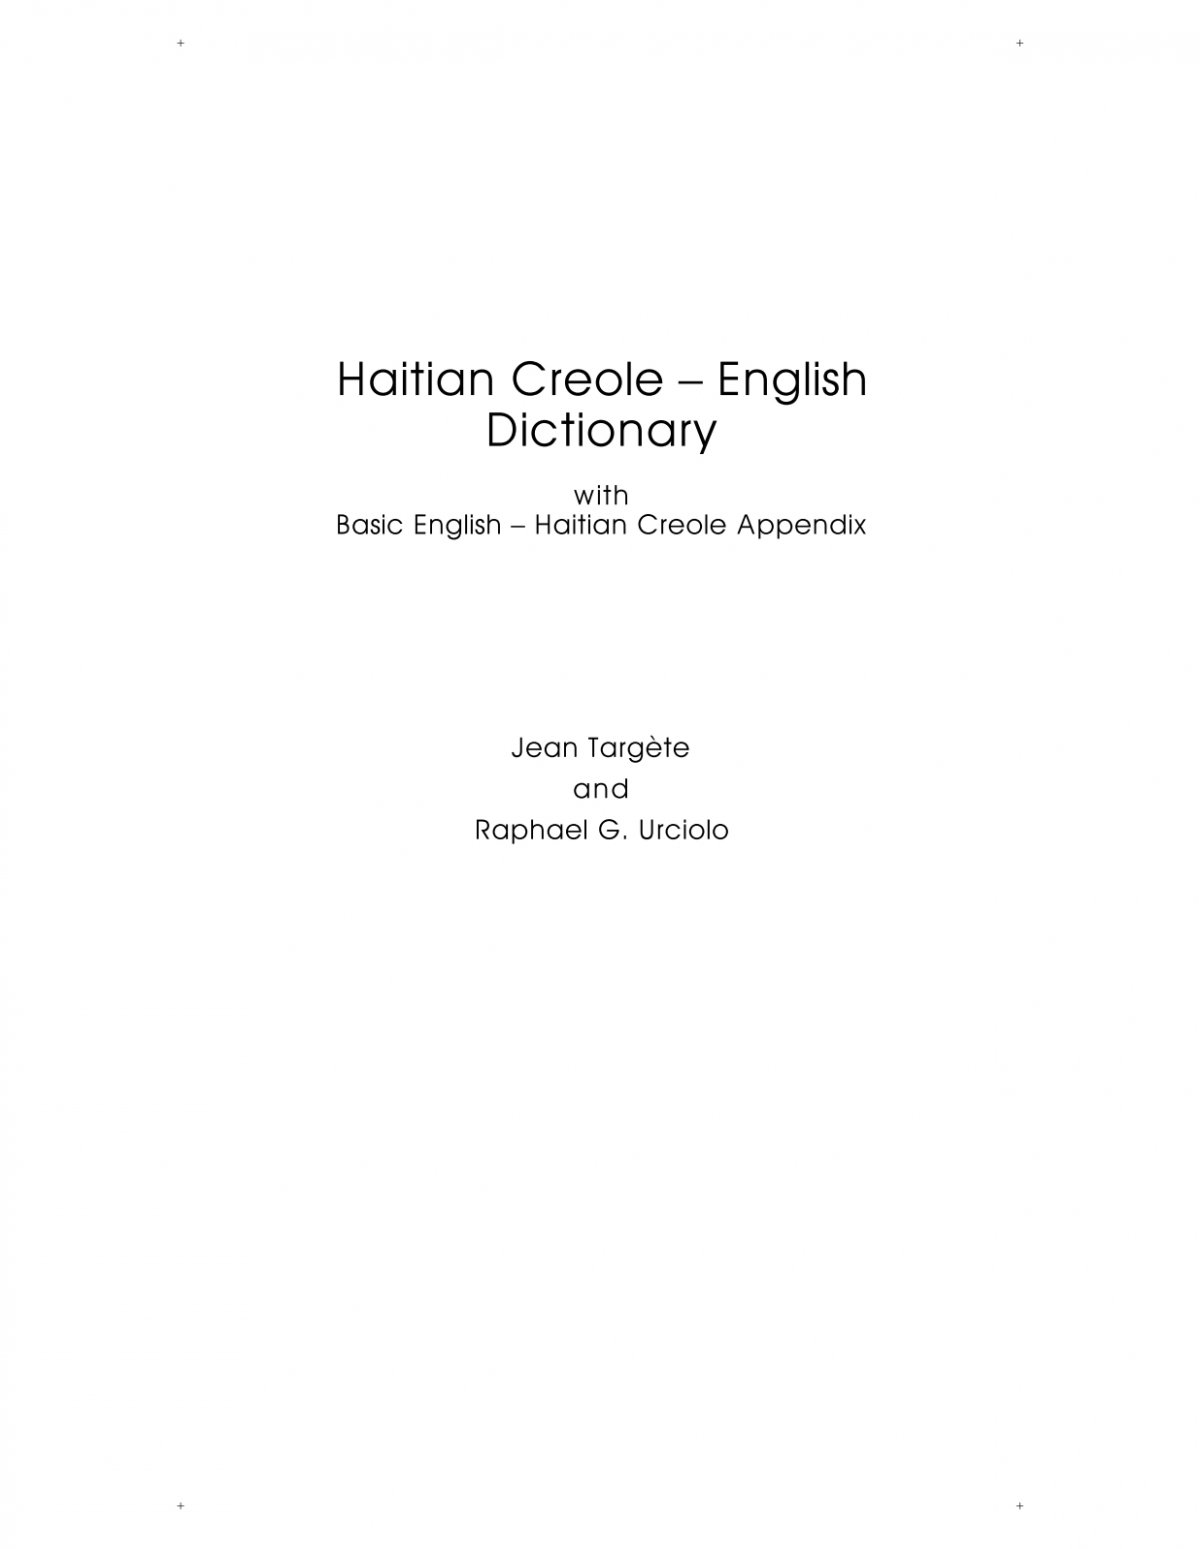 Haitian_Creole_English_Dictionary_2nd_printing pic